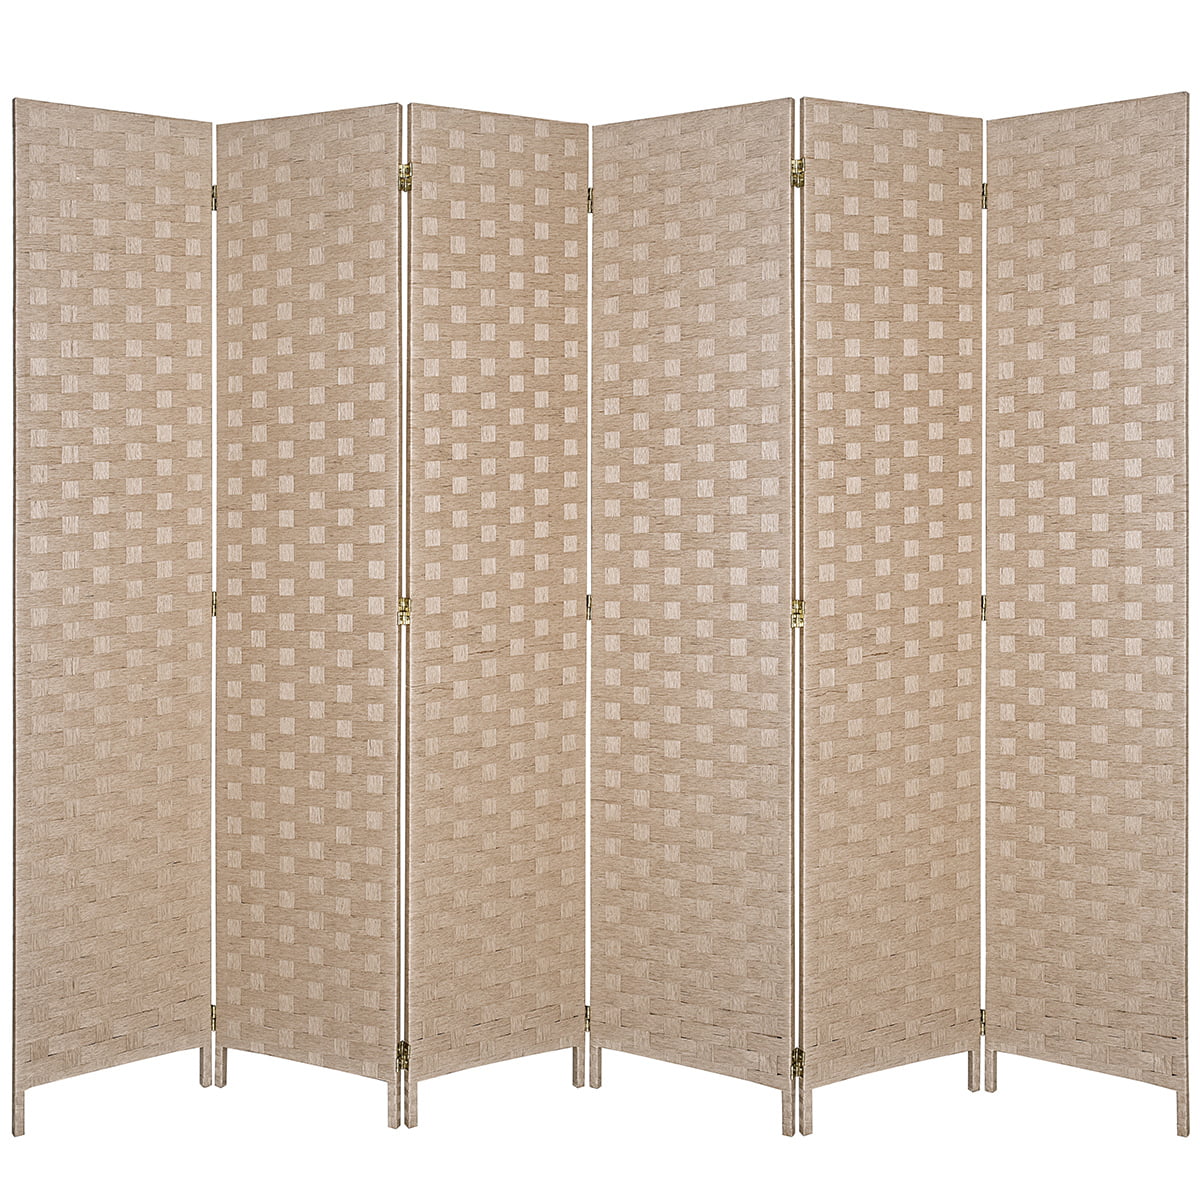 Details about   6ft 4 Panel Weave Fiber Room Divider Folding Freestanding Privacy Screen Brown 